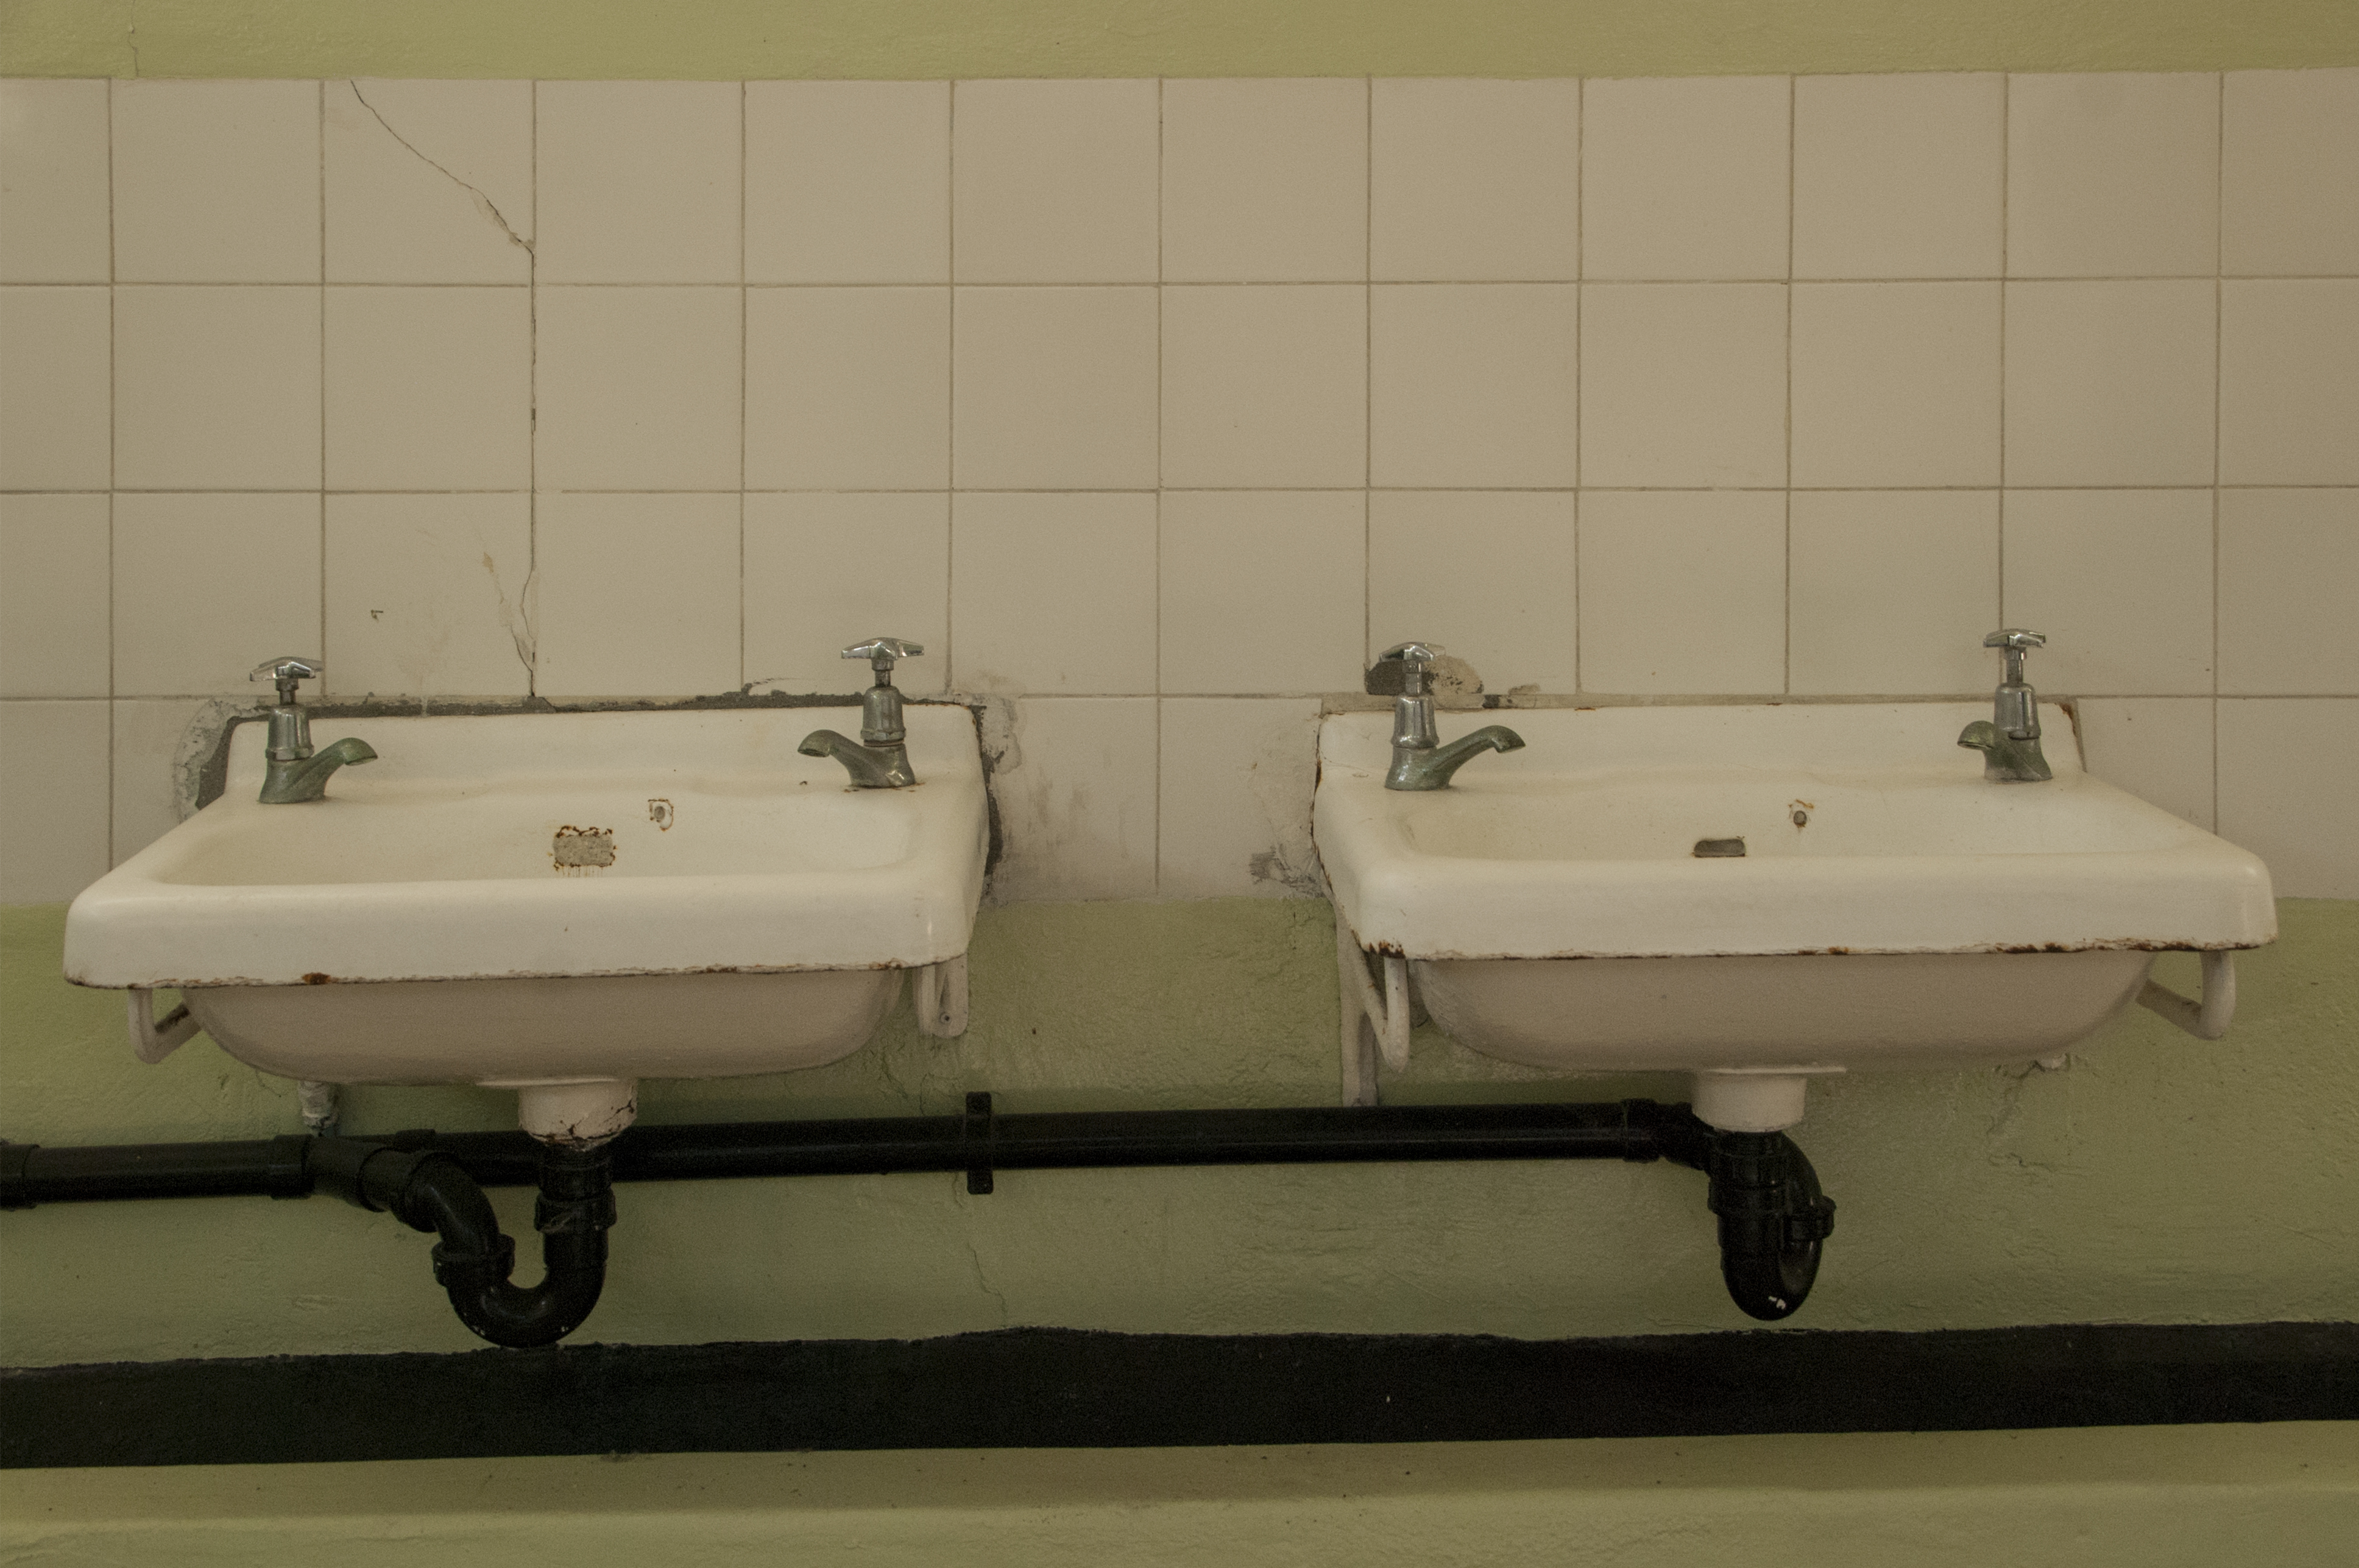 Wash basins, Maximum Security Prison, Robben Island (01)